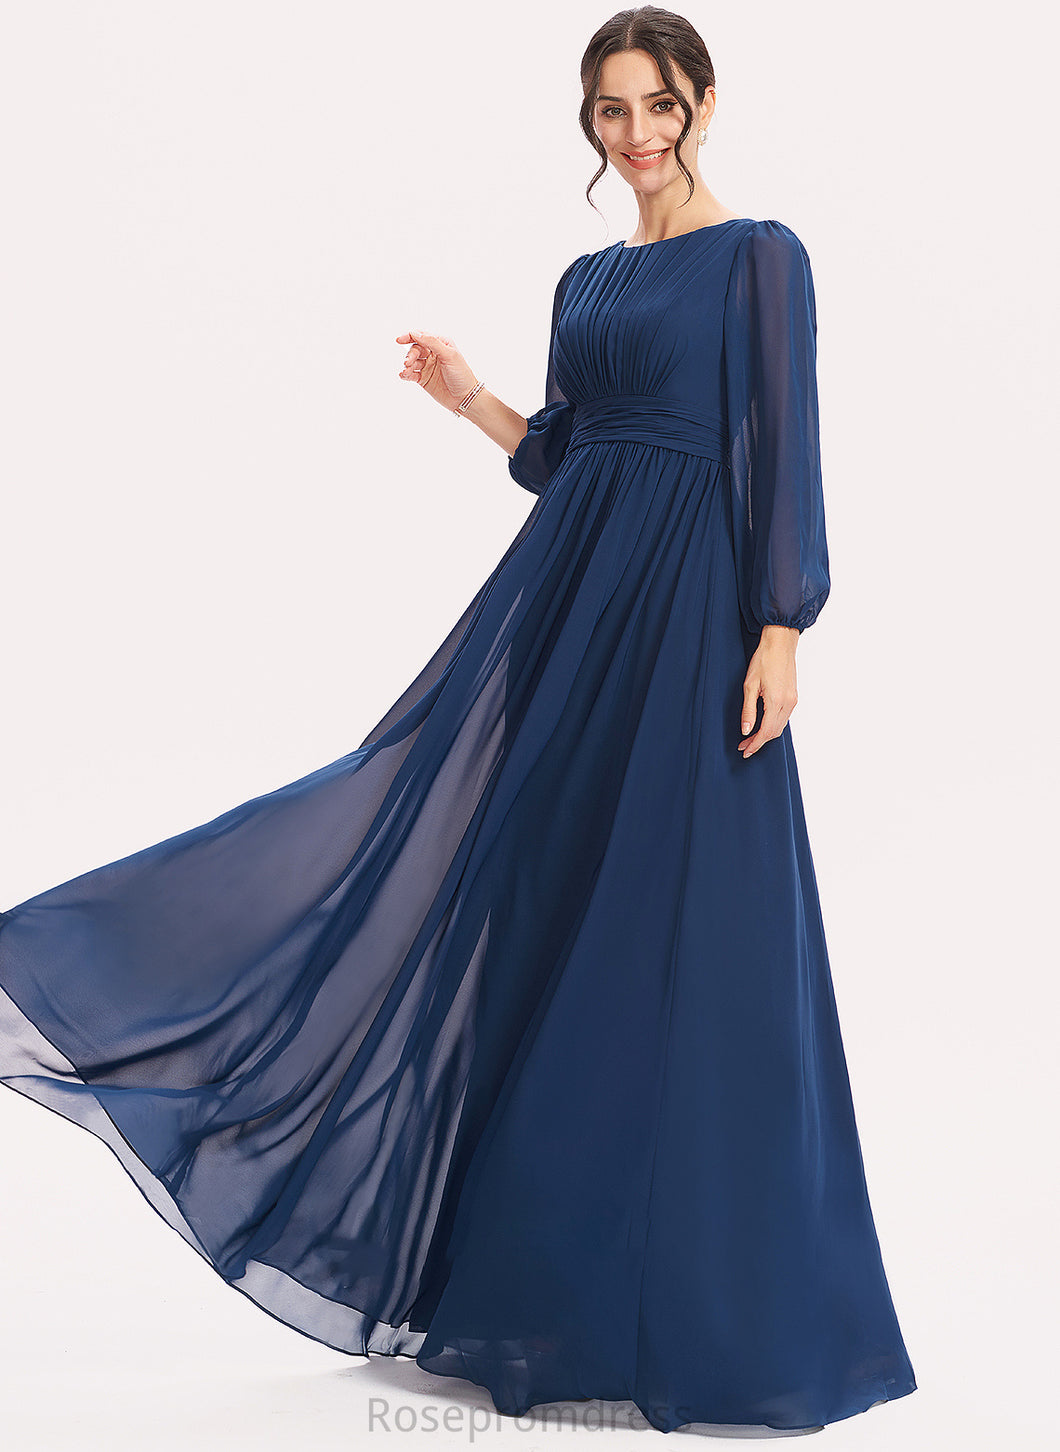 Embellishment Floor-Length Straps Length Ruffle Silhouette Fabric A-Line Jaylynn A-Line/Princess Natural Waist Sleeveless Bridesmaid Dresses